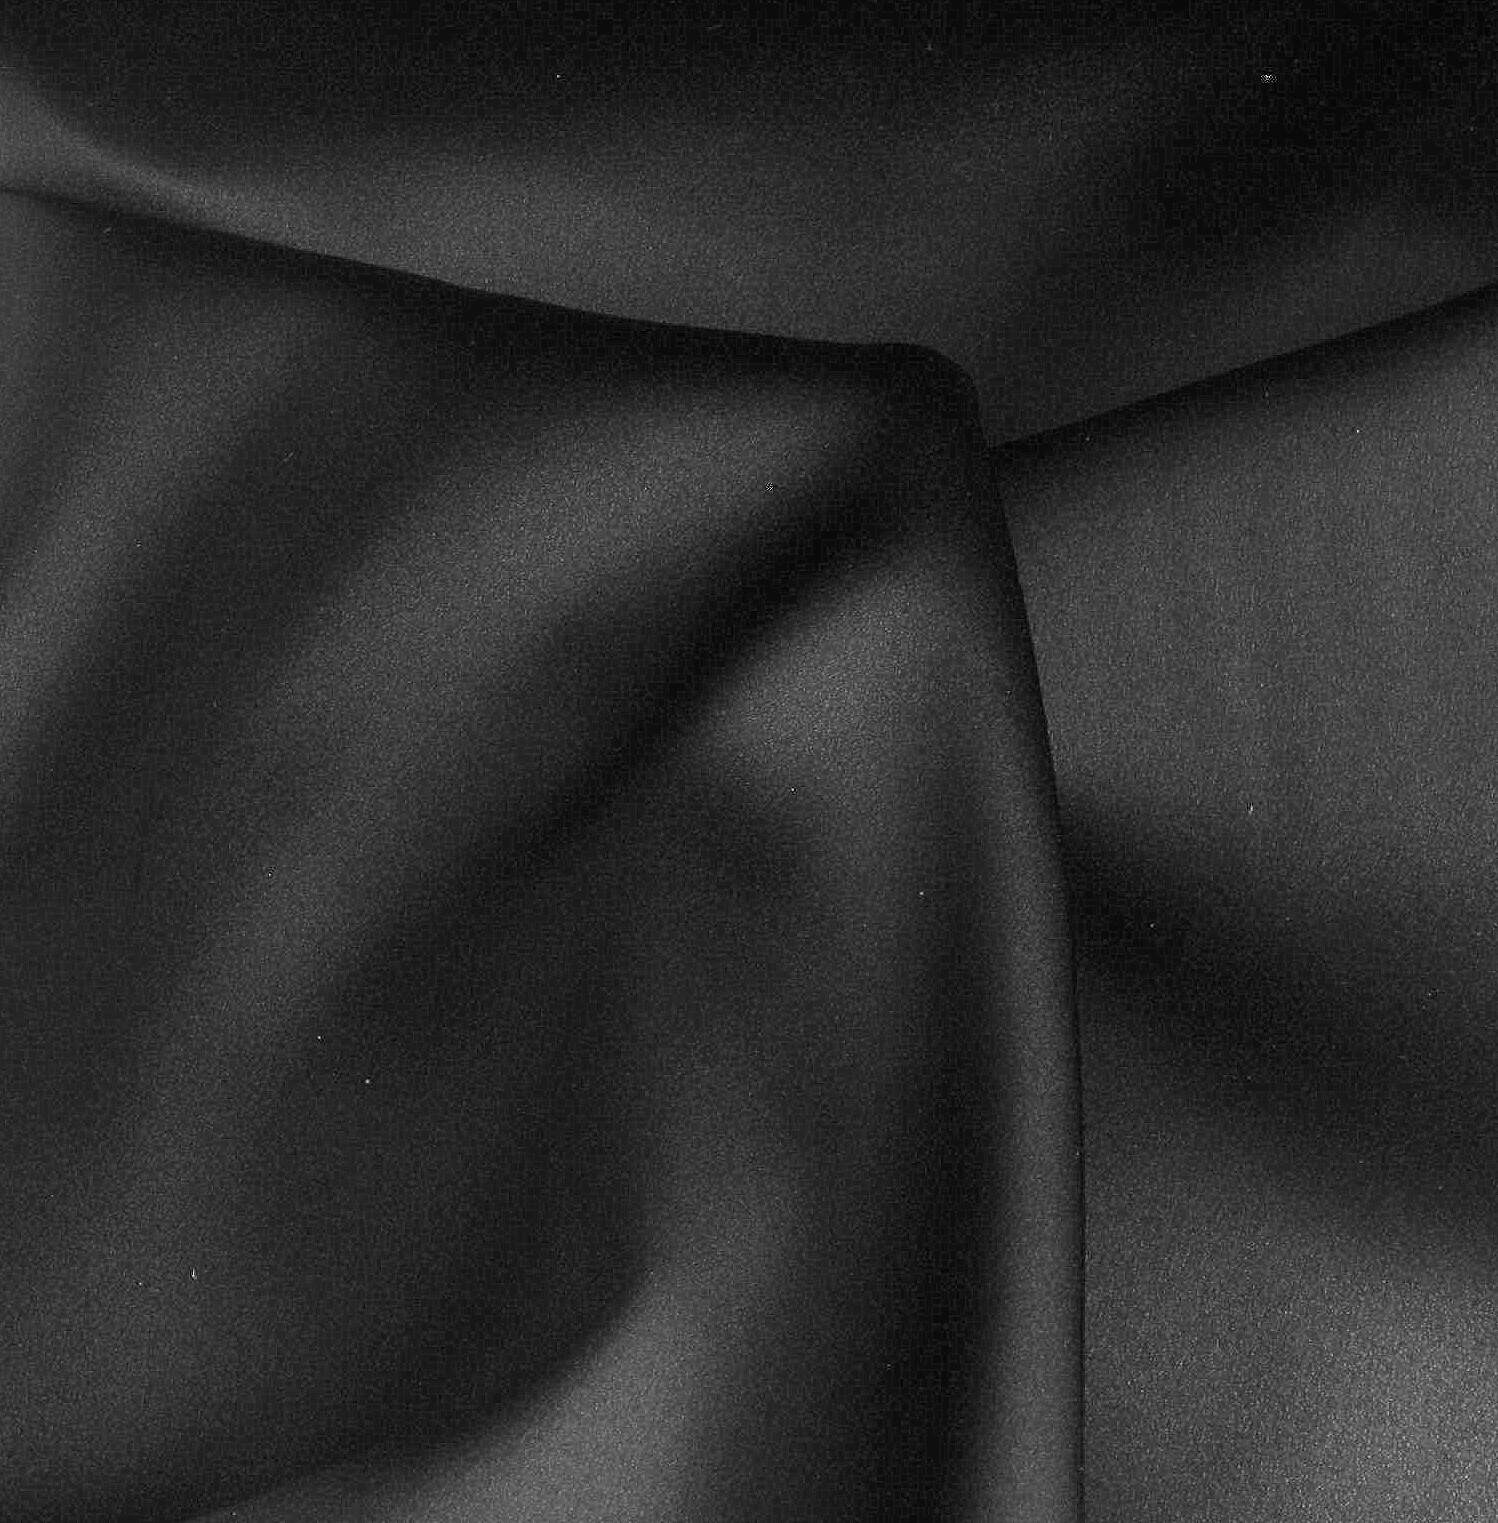 Stretch silk satin 19 mm. in deep black dull satin